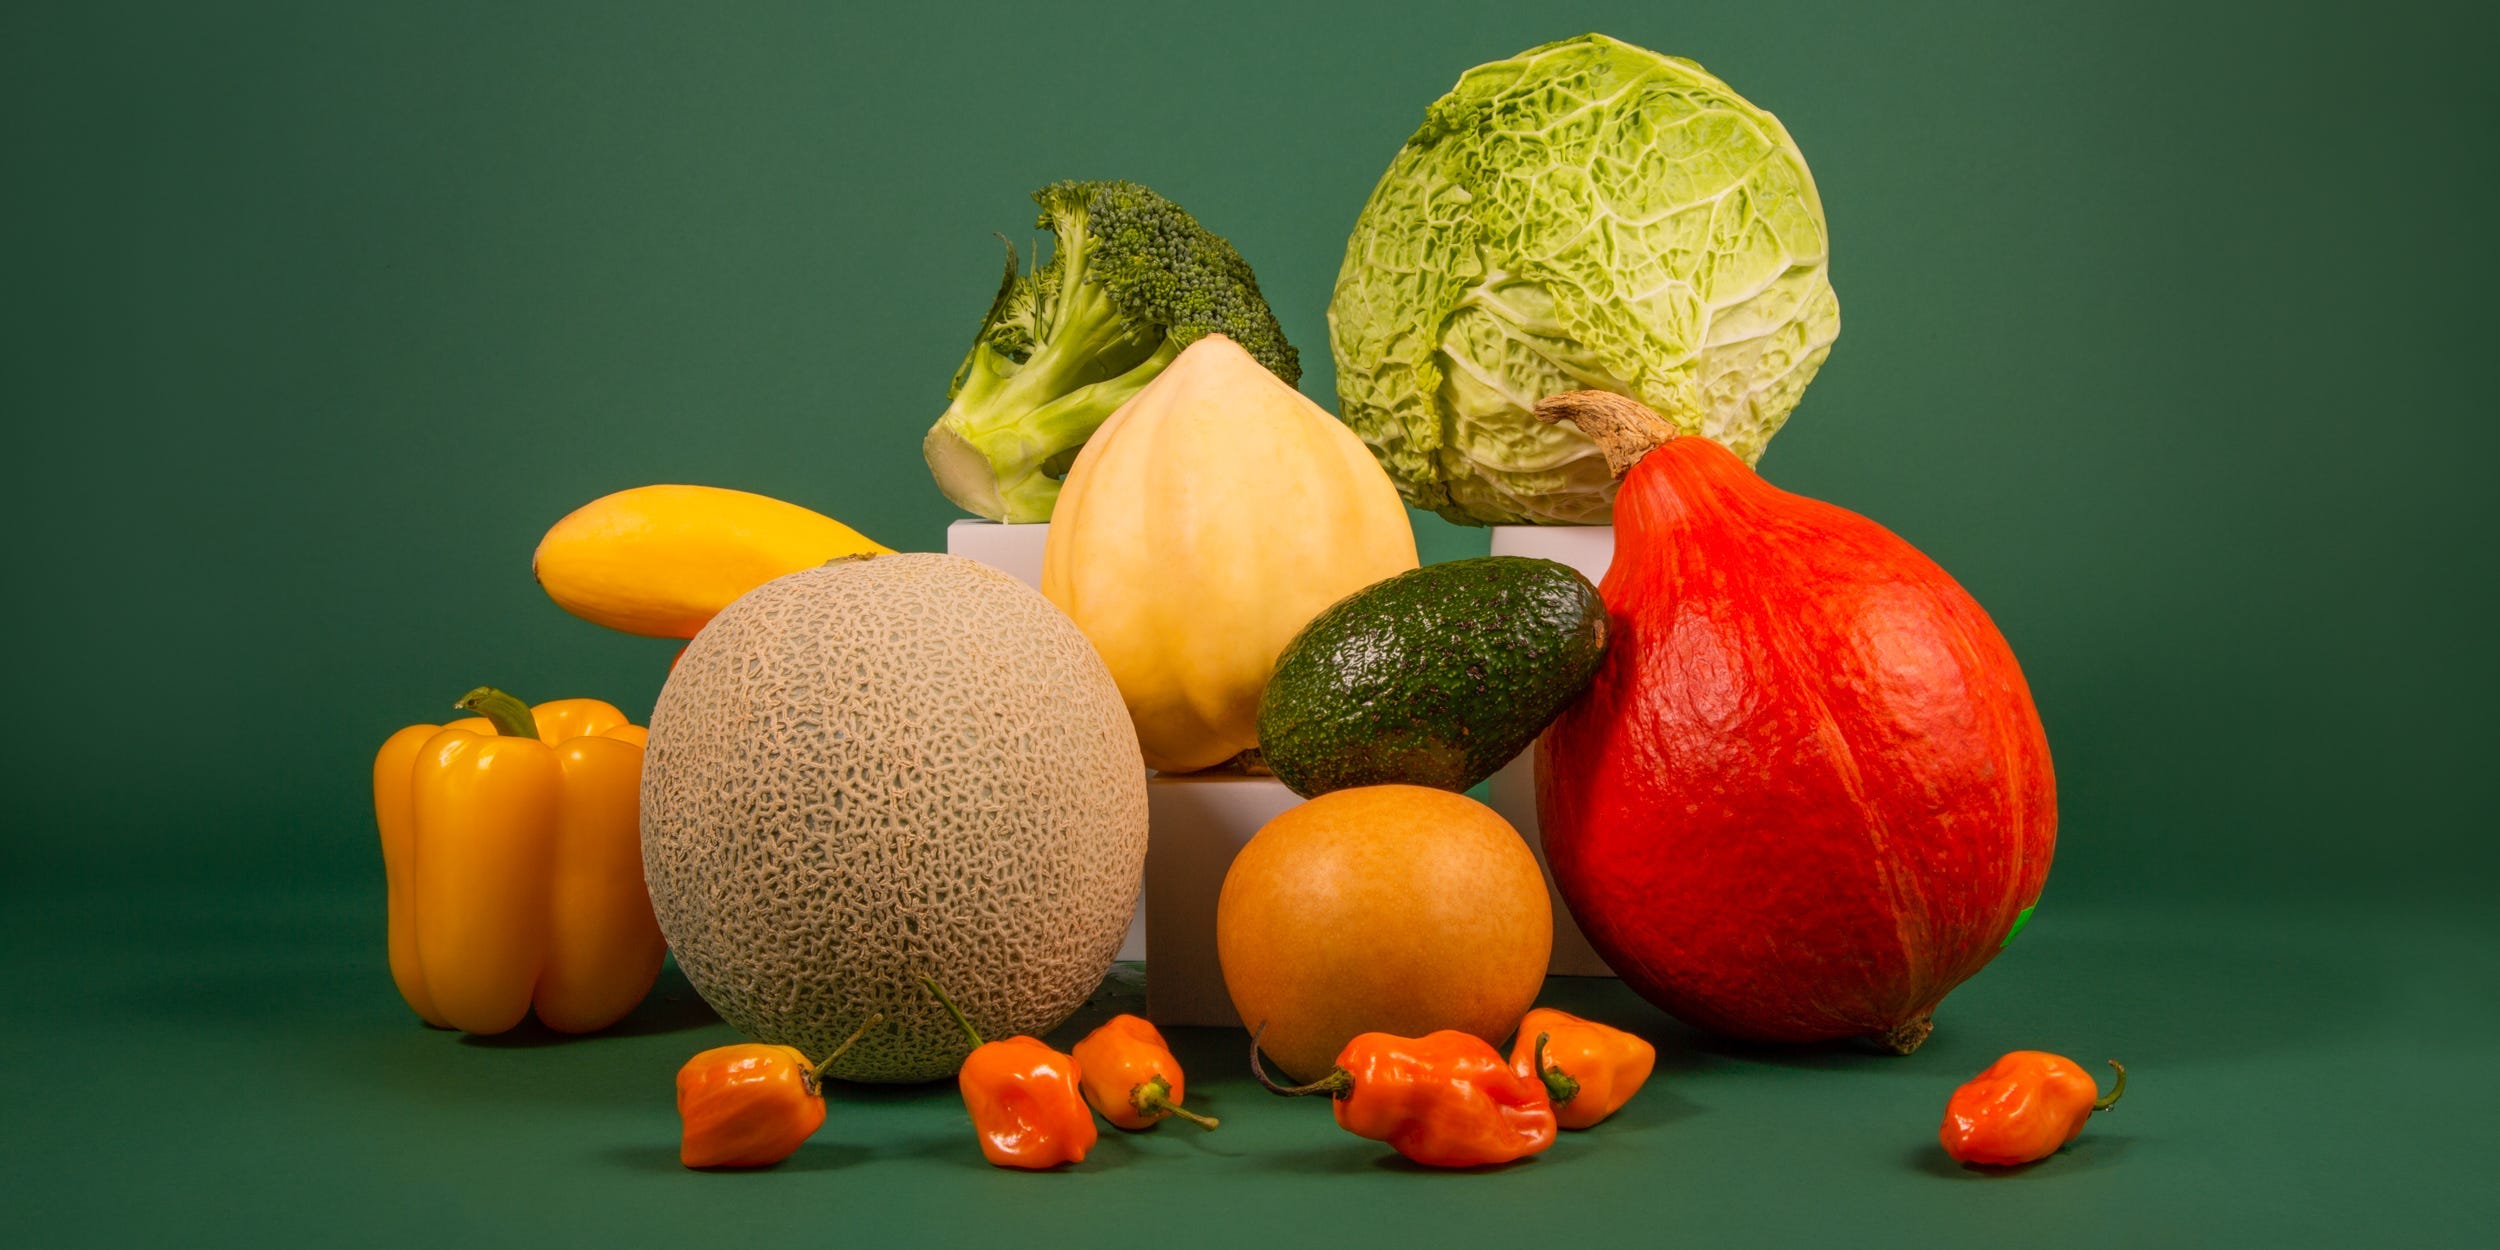 health weightloss greens vegetables veggies fruits vegan vegetarian grocery groceries fitness nutrition scale farmer’s market wellness